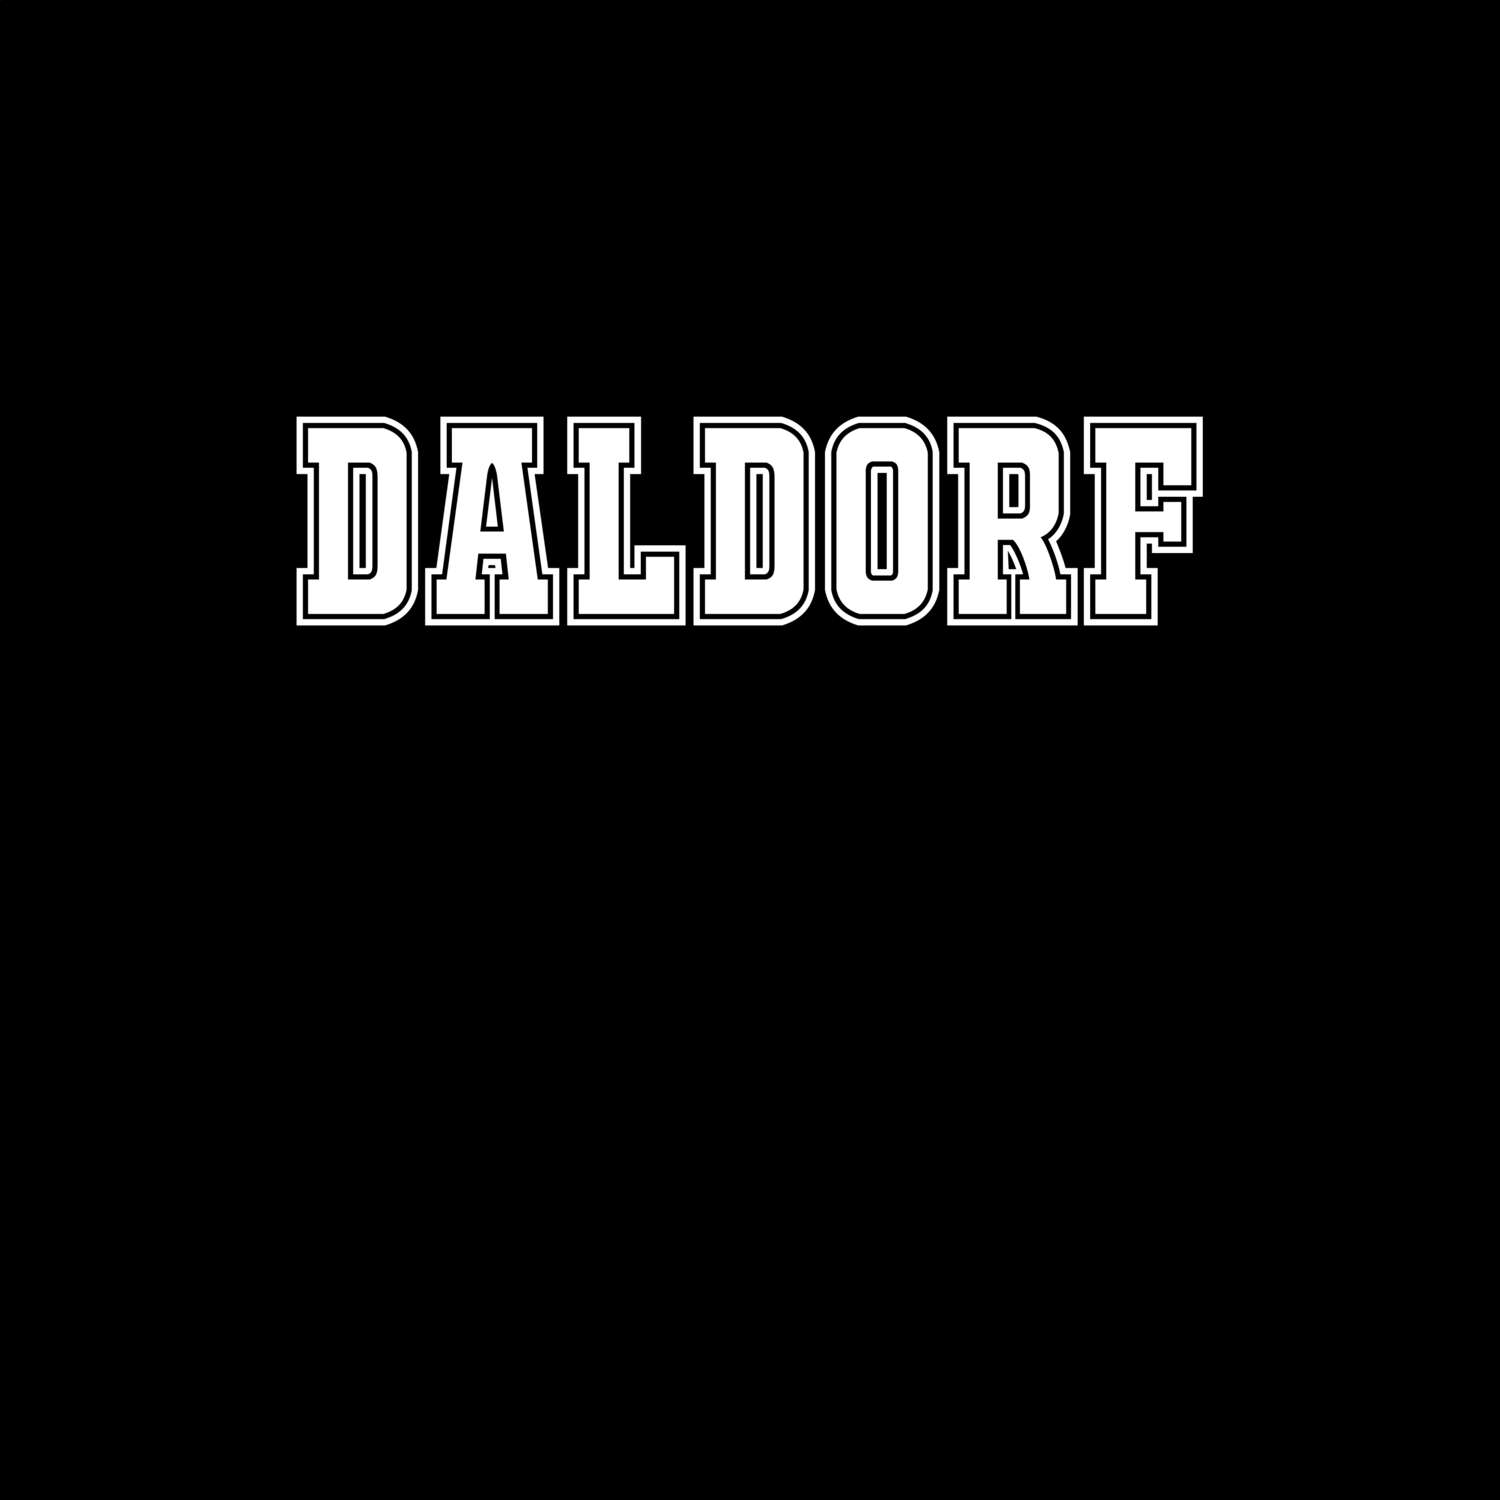 Daldorf T-Shirt »Classic«